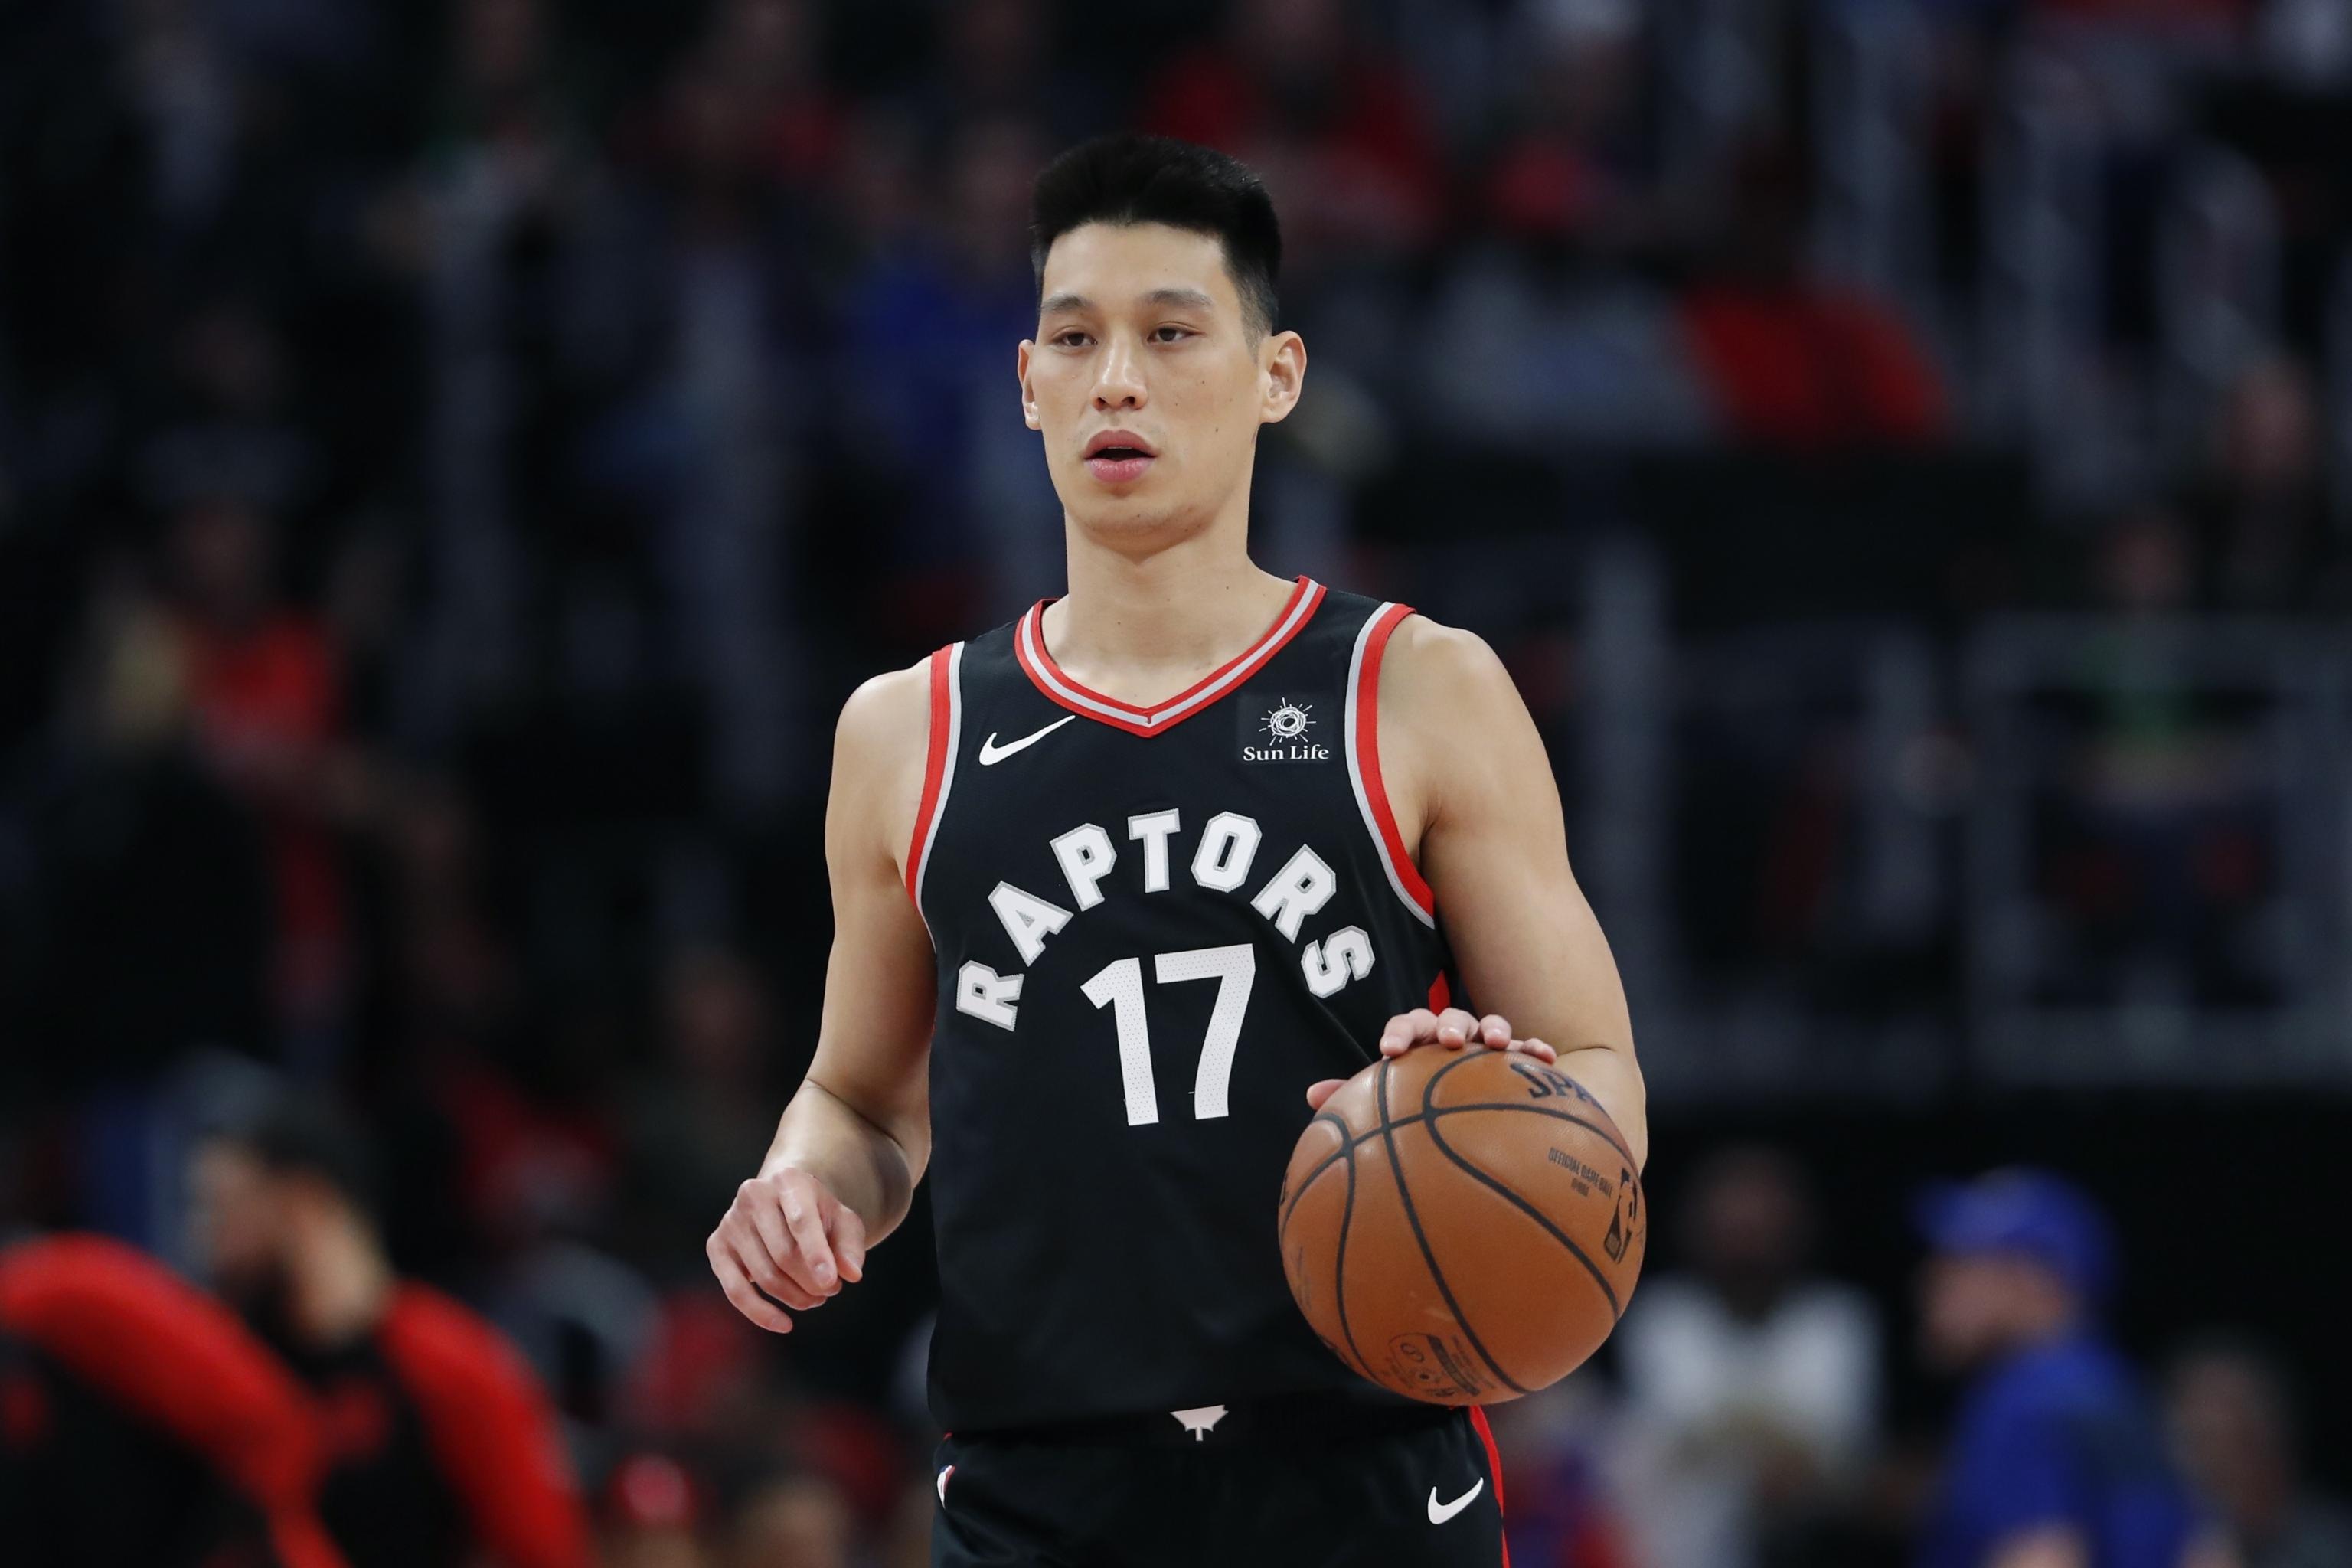 Tearful Jeremy Lin seeks NBA return after one season in China